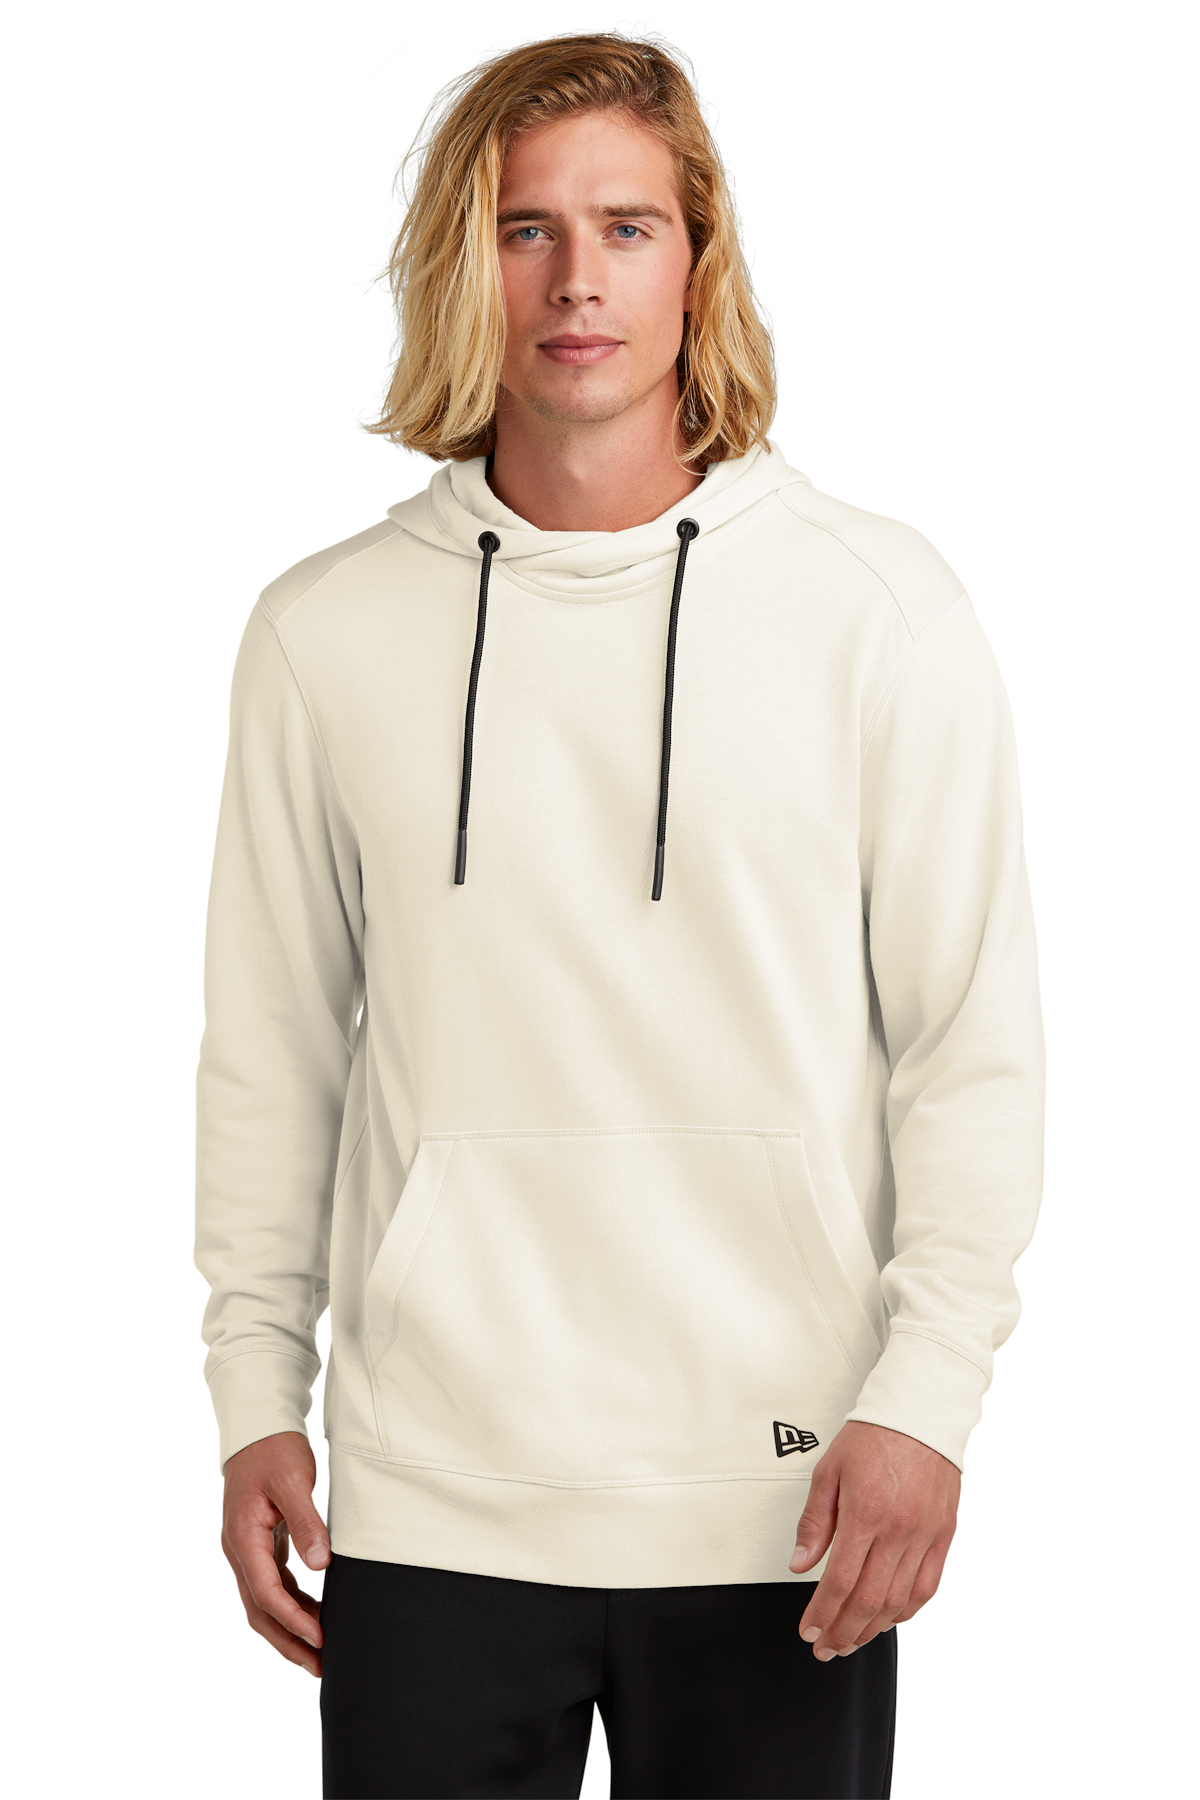 New Era Tri-Blend Fleece Pullover Hoodie | Product | SanMar